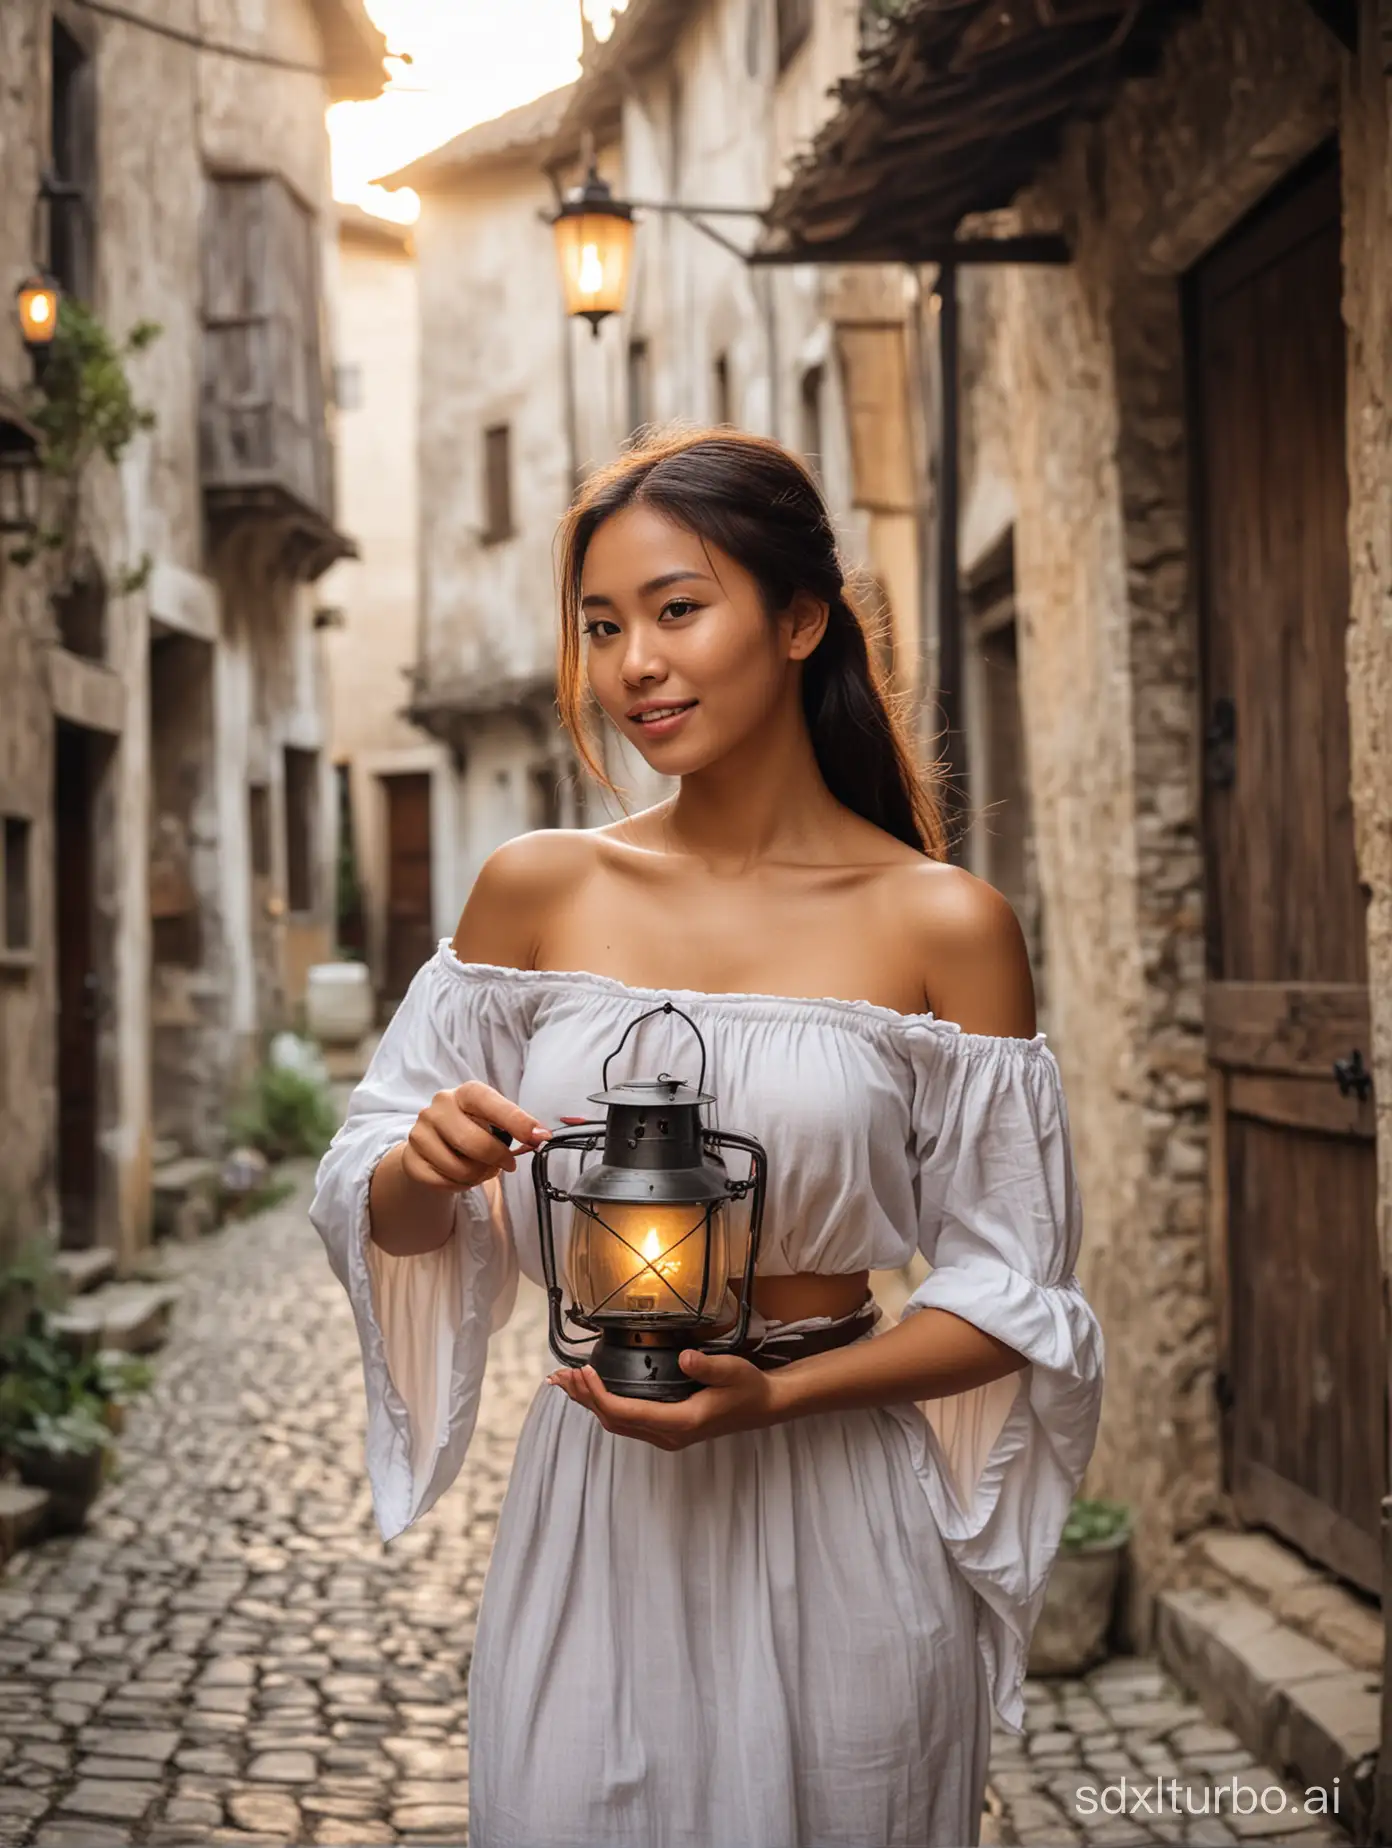 Medieval-Filipina-Woman-Holding-Lantern-in-Village-Streets